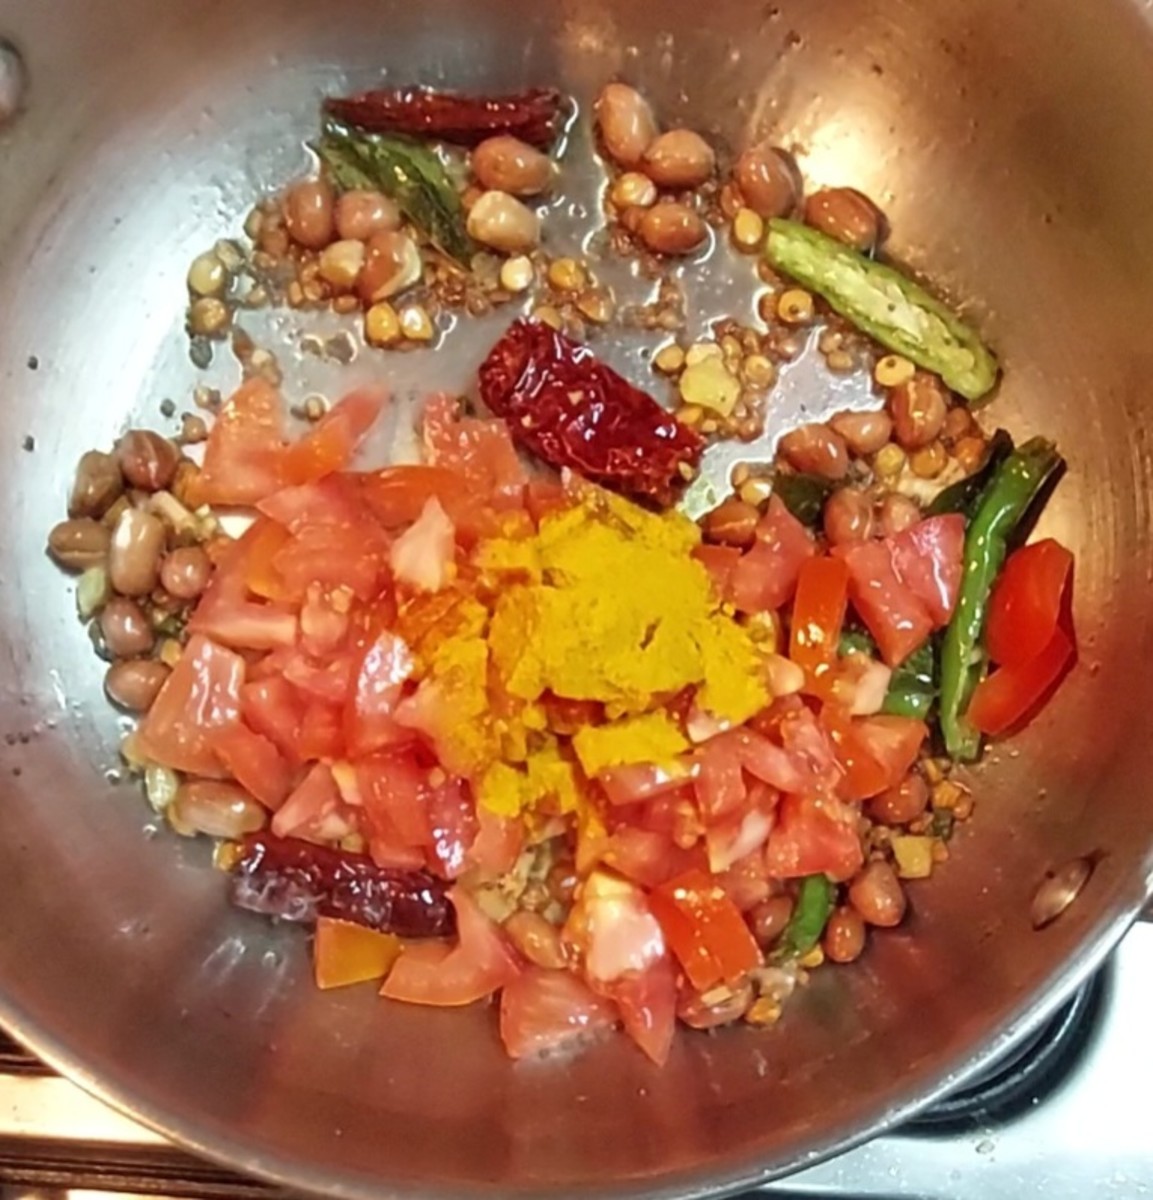 Add 1-2 chopped tomatoes and 1/2 teaspoon turmeric powder.